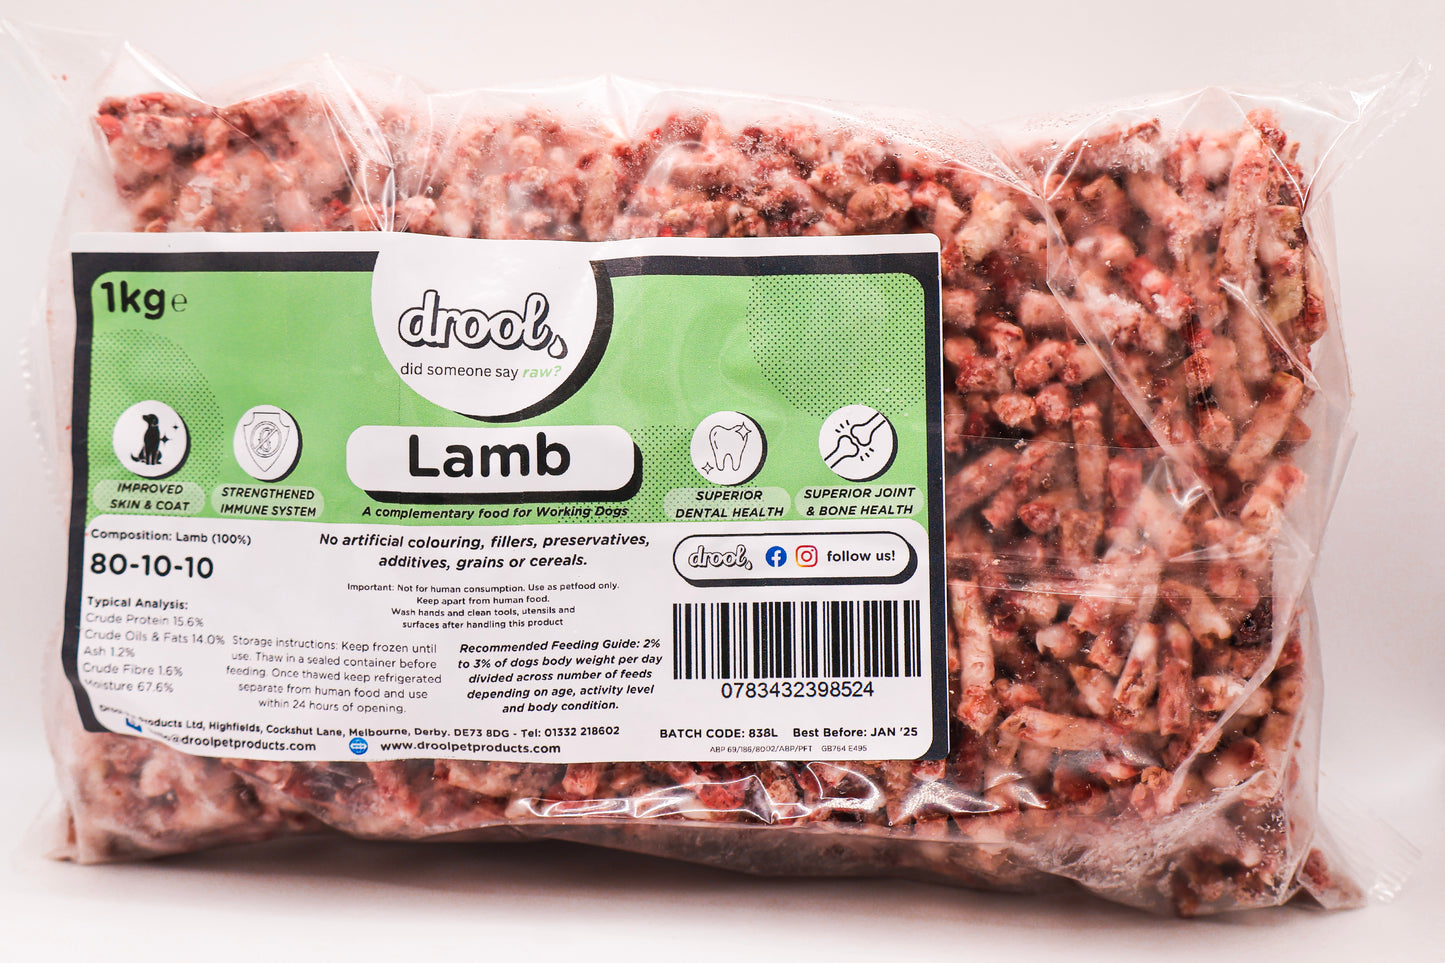 Drool Freeflow Lamb Mince 1kg